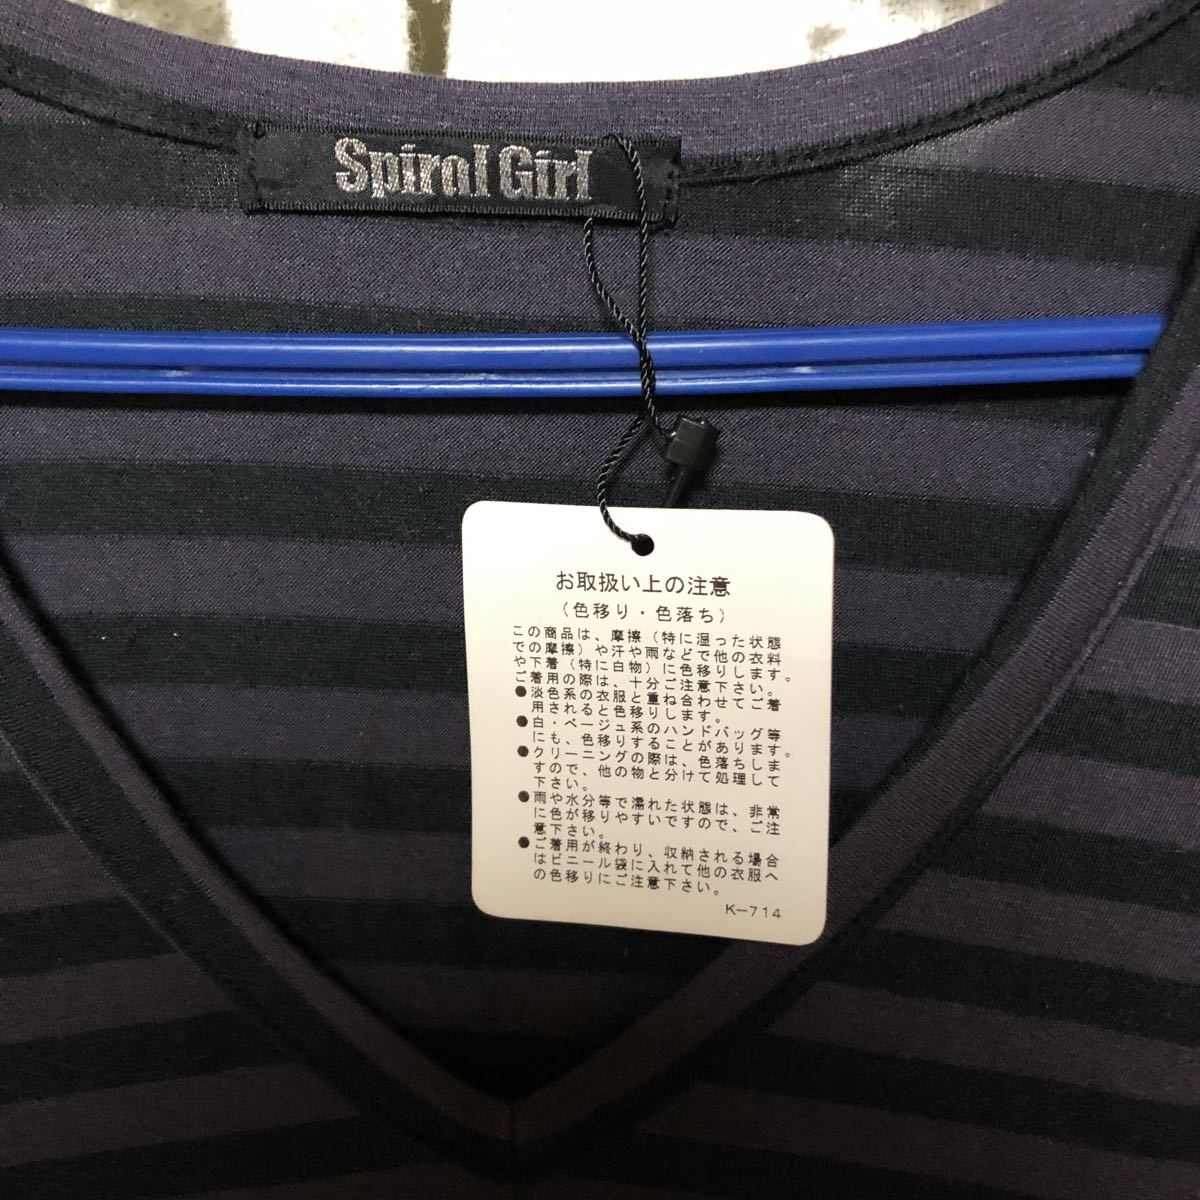  новый товар супер-скидка Spiral Girl окантовка футболка M